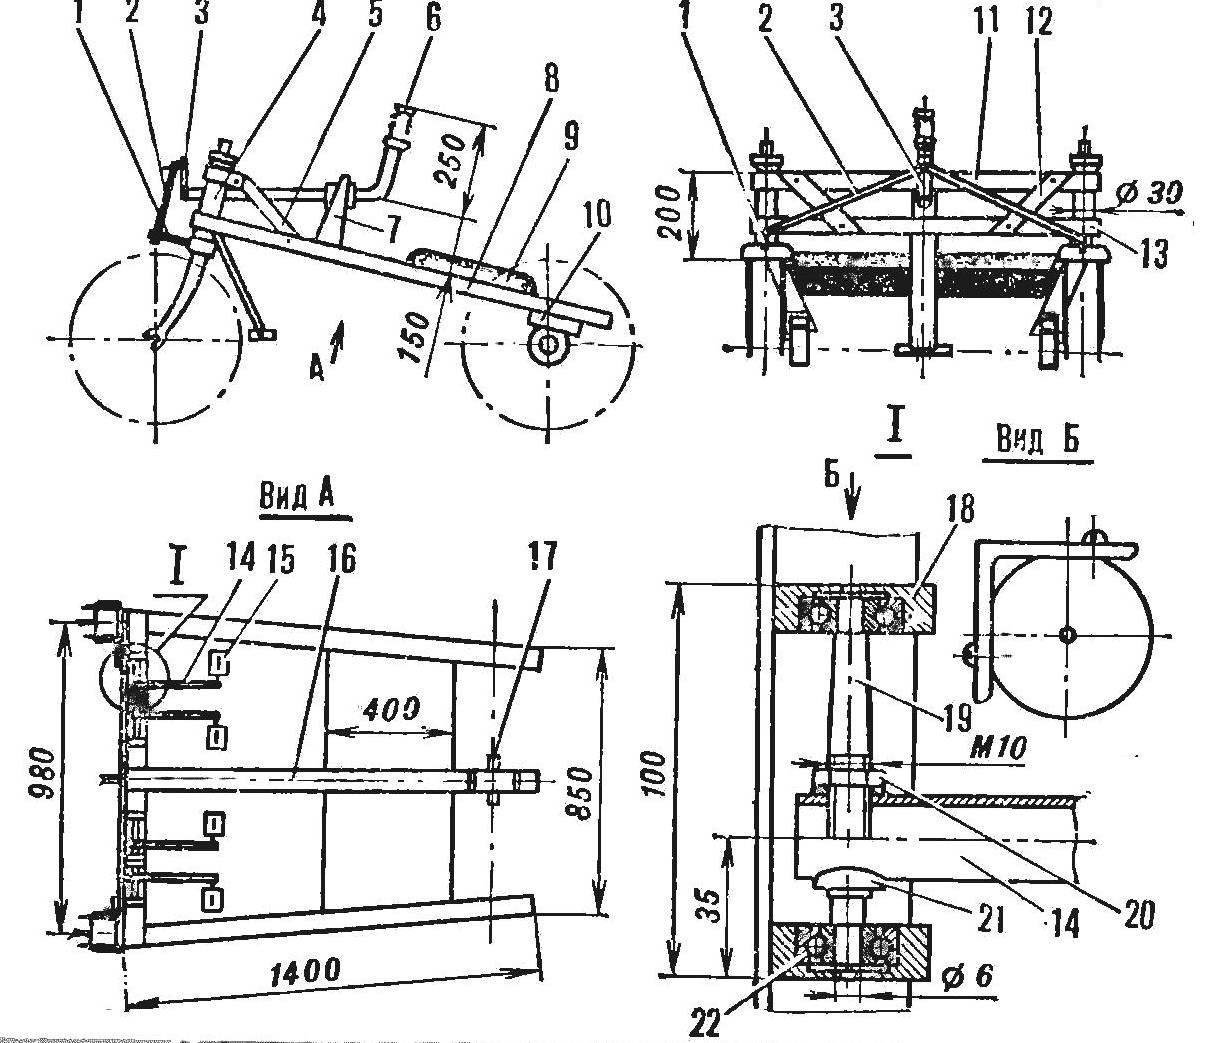 Fig. 4. Frame of the velomobile